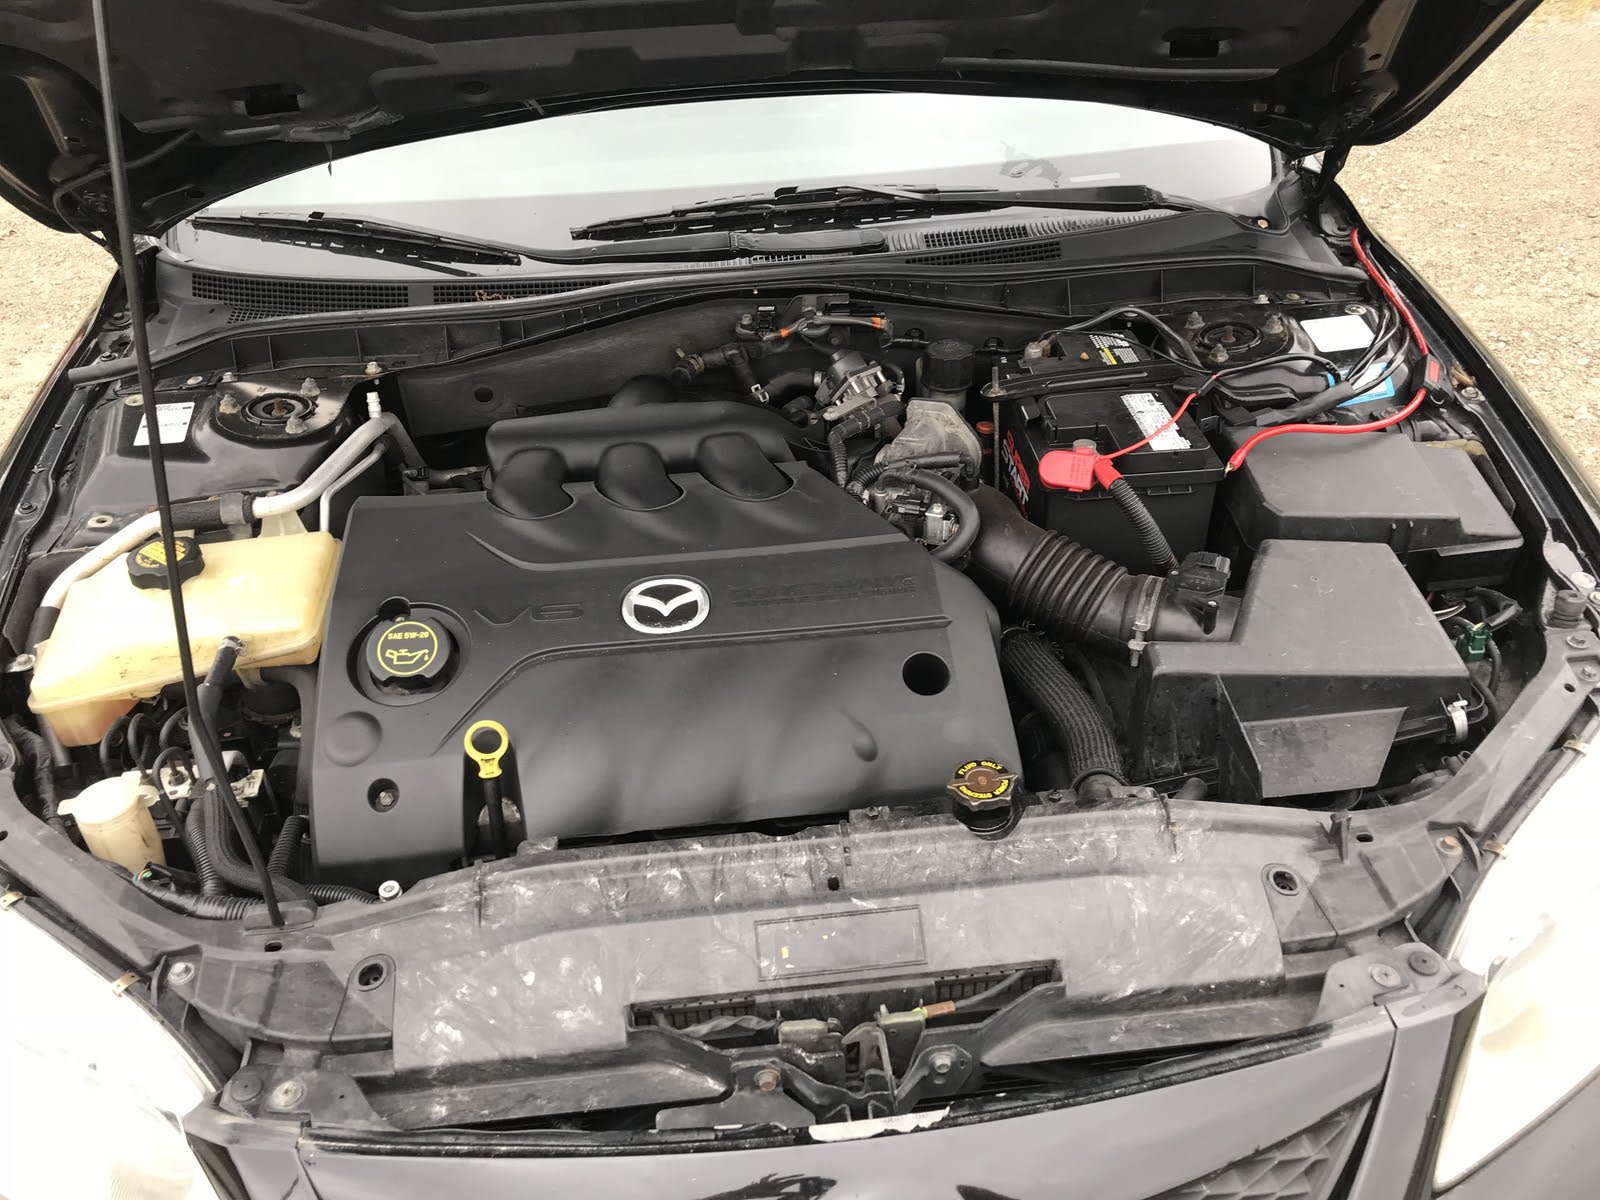 Mazda MAZDA6 Questions - V6 Mazda 6 Engine Swap - CarGurus